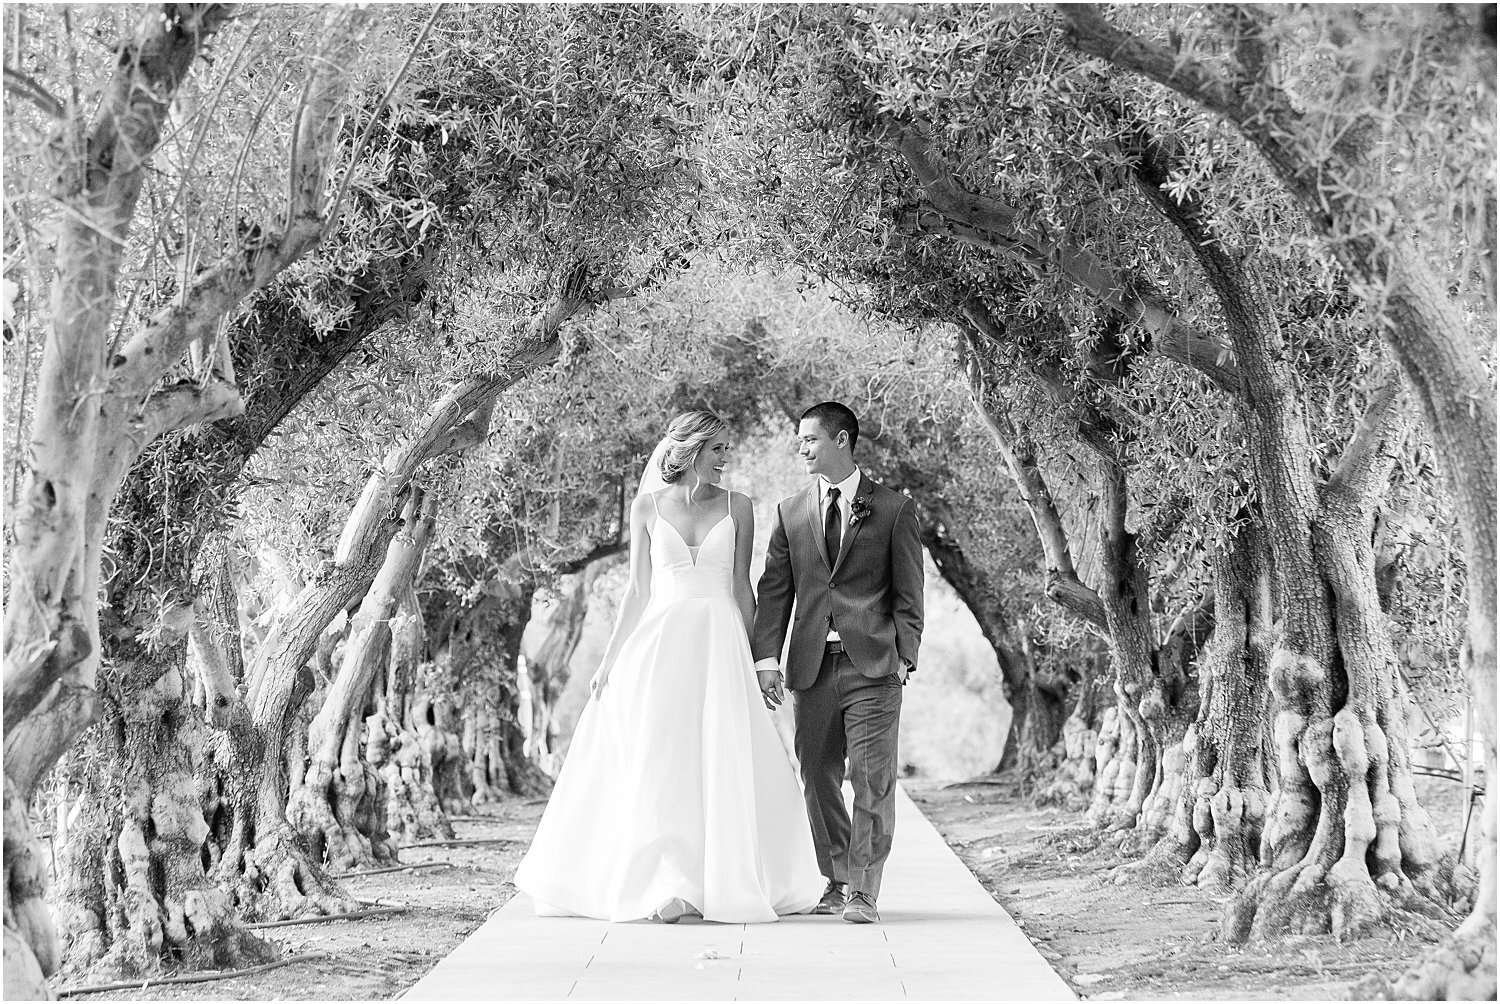 1985lukephotography.com | 1985 Luke Photography Bay Area San Francisco Northern California Wedding Photographers | Sycamore Creek Vineyards | Morgan Hill Weddings 57.jpg